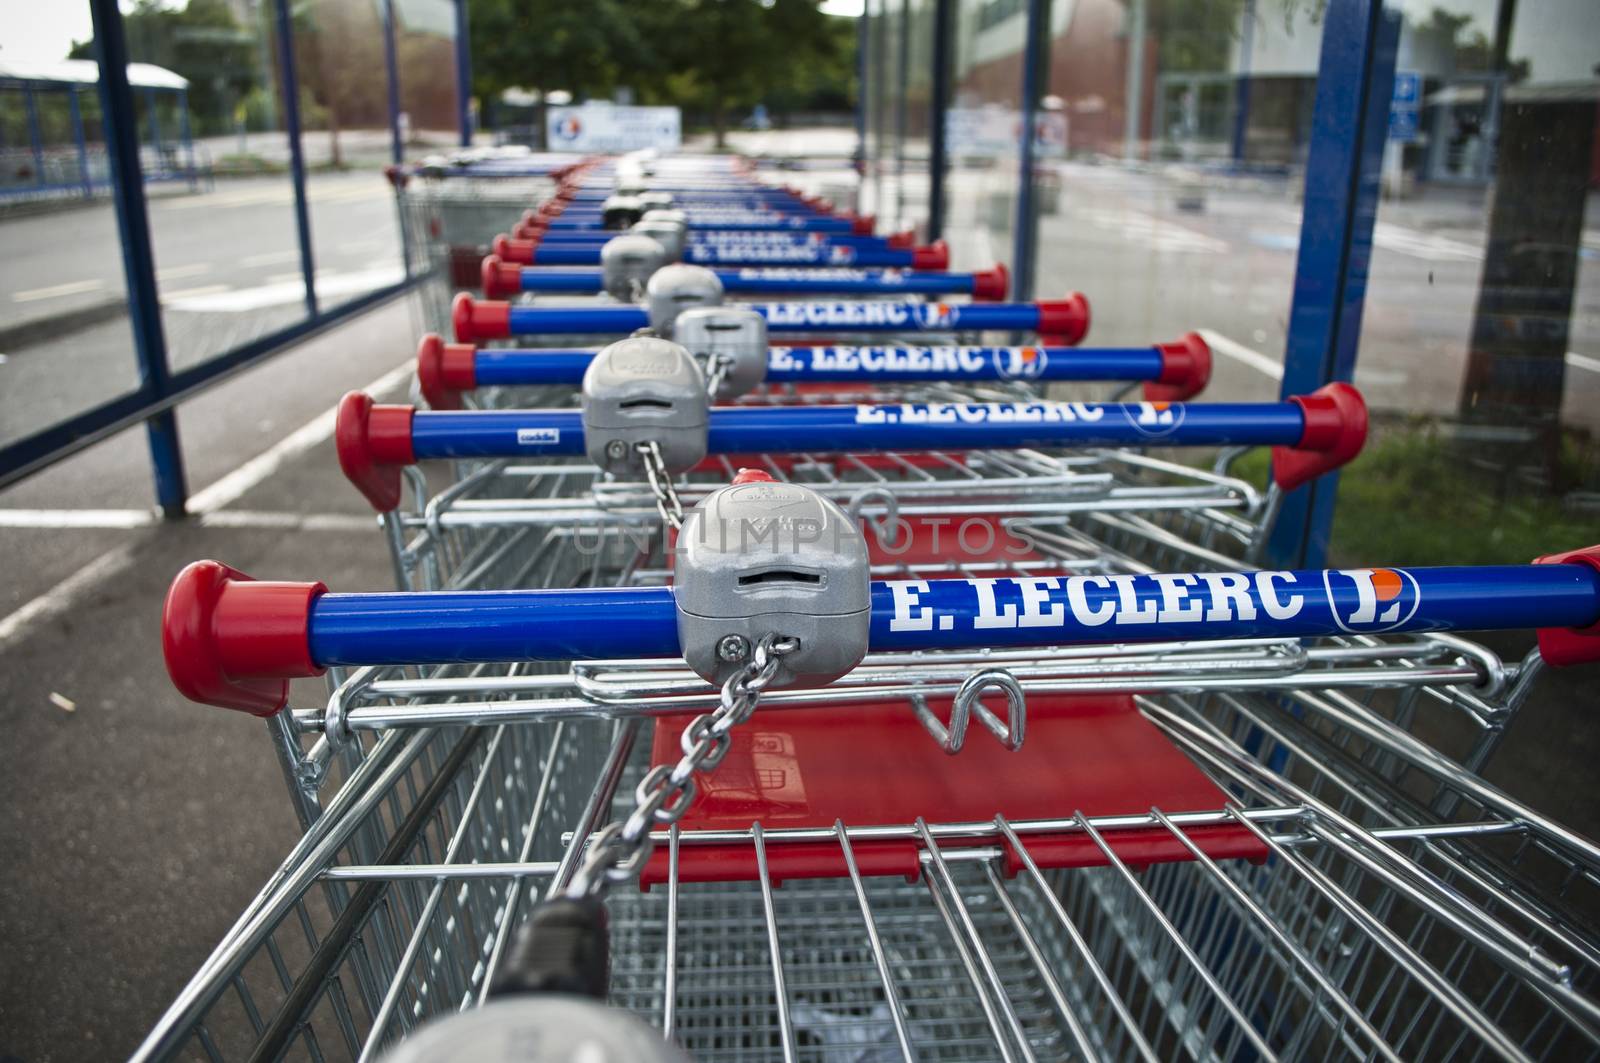 market's trolleys in Lecrercq Market - Mulhouse - France - 17 august 2014